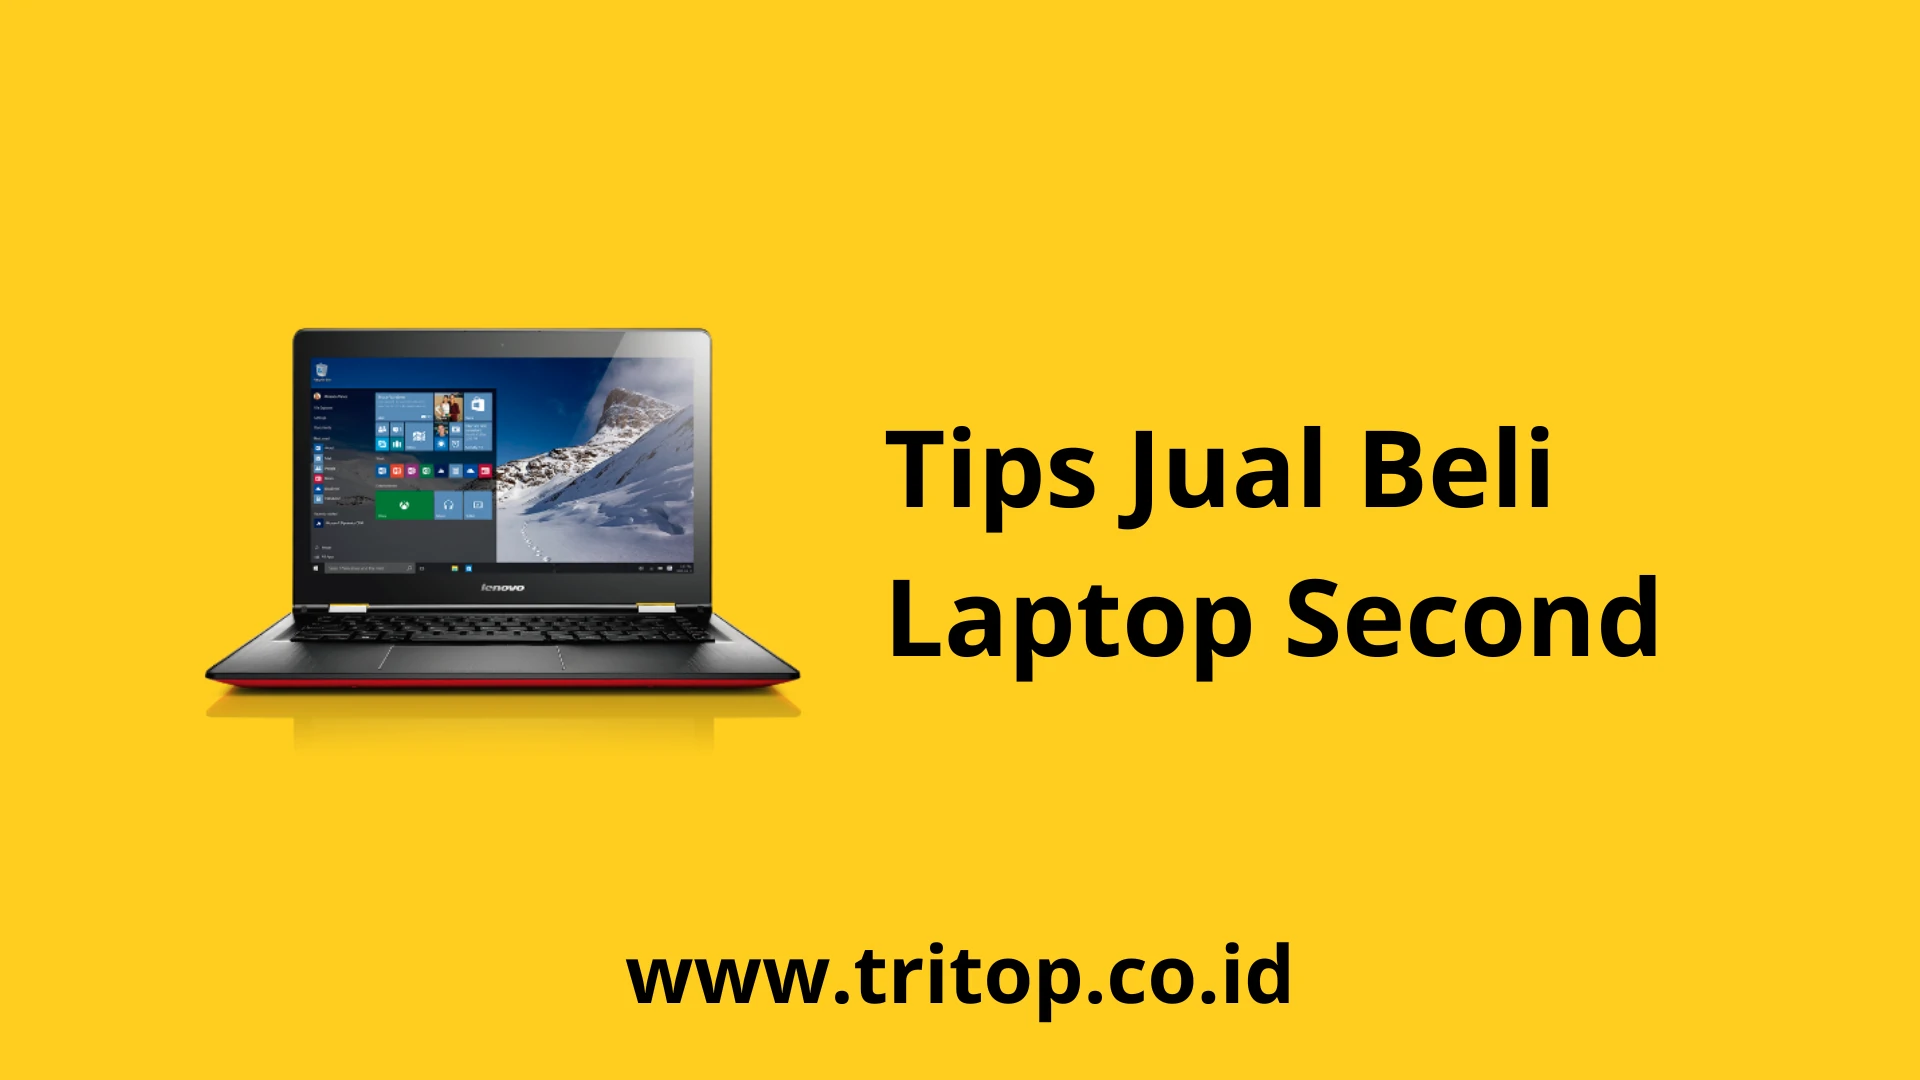 Jual Beli Laptop Second Tritop.co.id